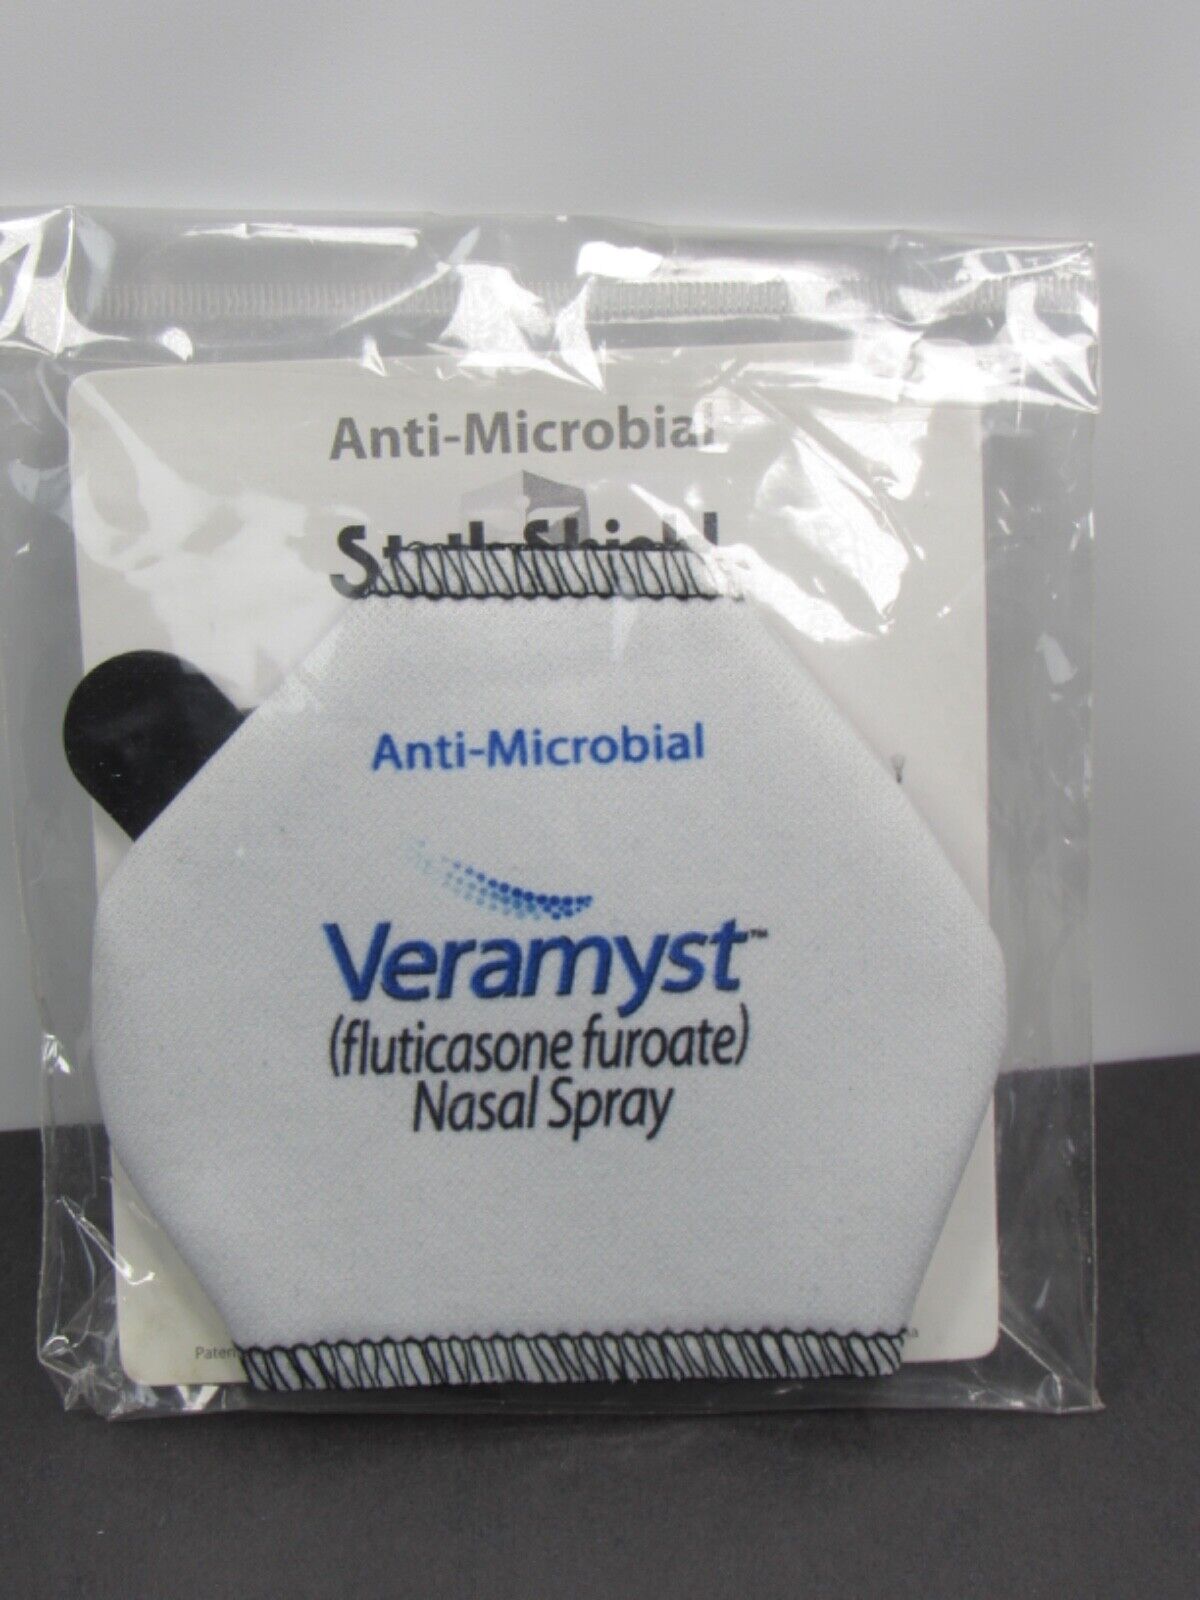 Veramyst Stethoscope Cover Anti-Microbial Drug Rep Pharmaceutical Advertising